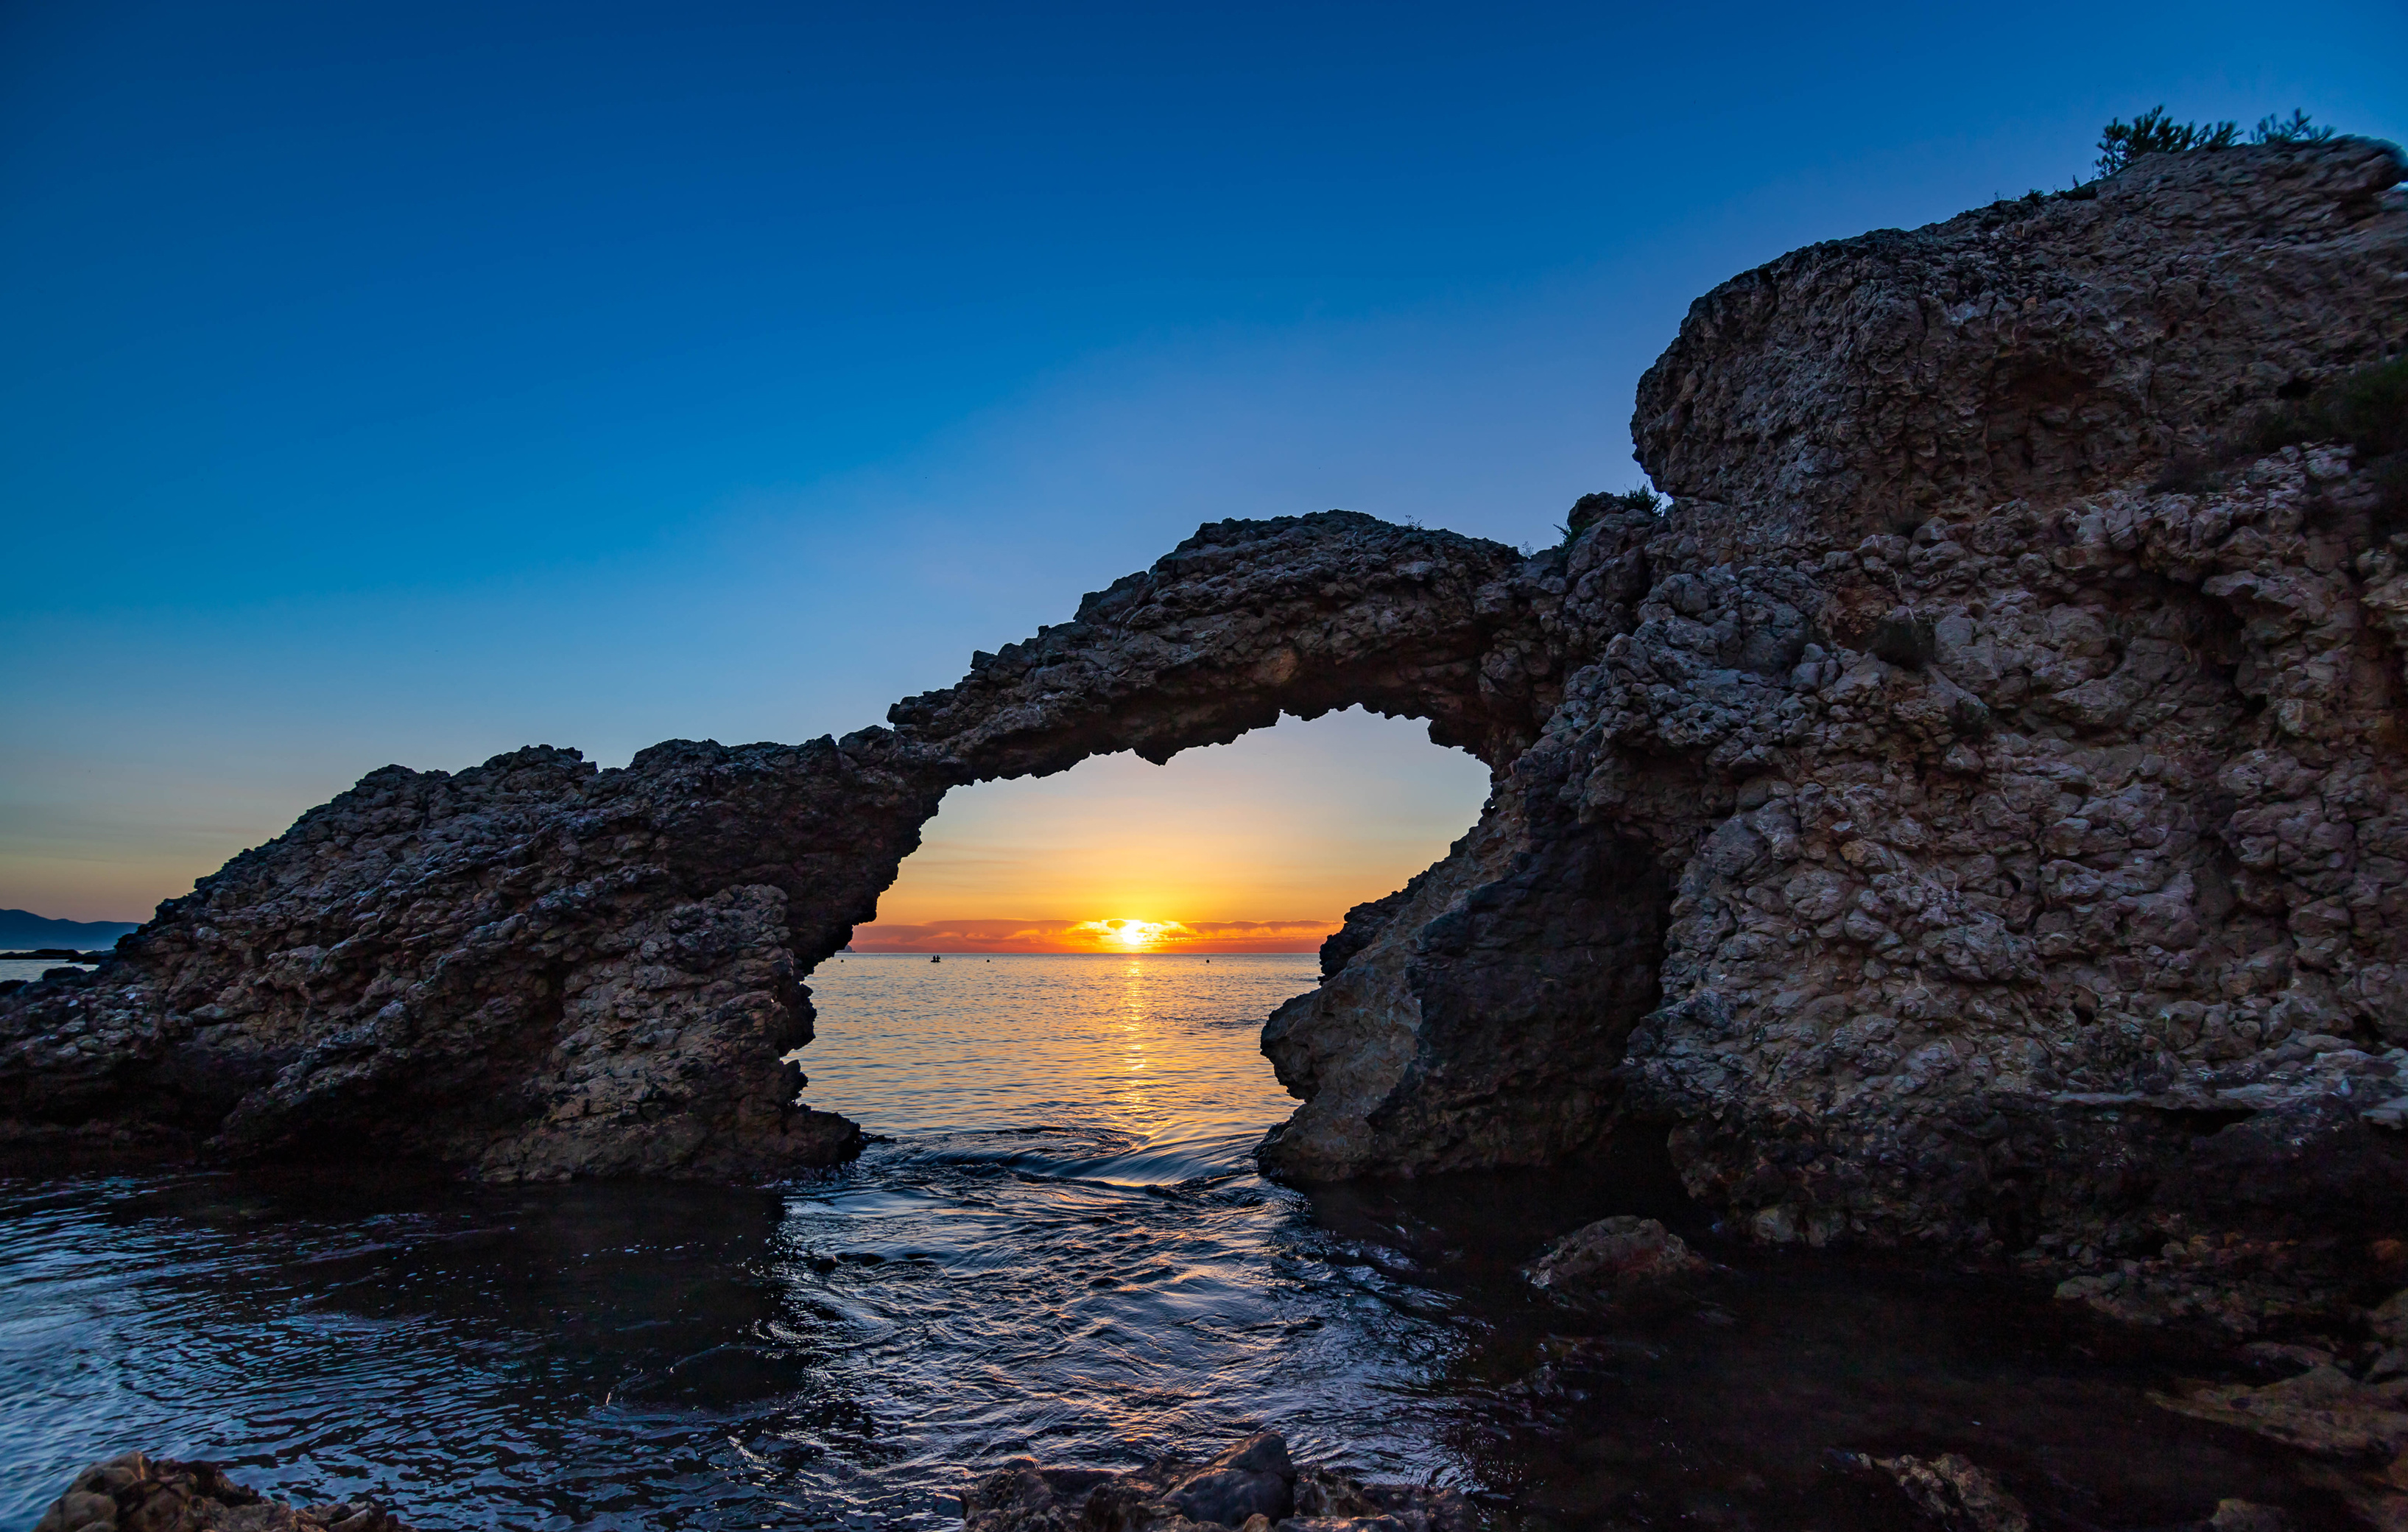 Фото природа Испания арка - бесплатные картинки на Fonwall